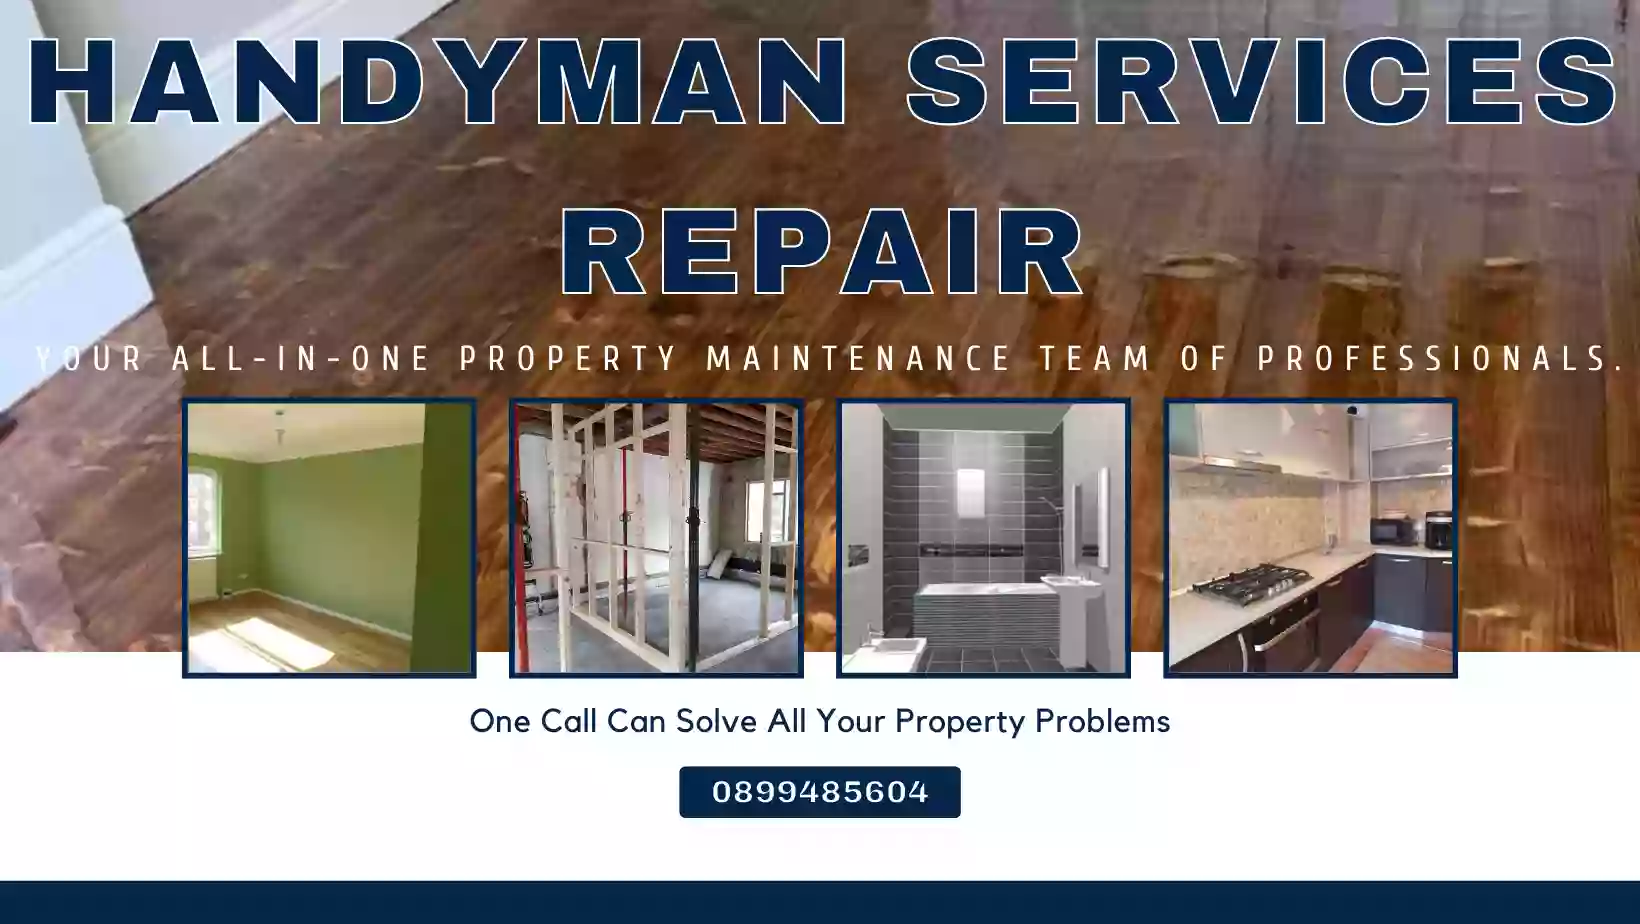 Handyman Services Repair